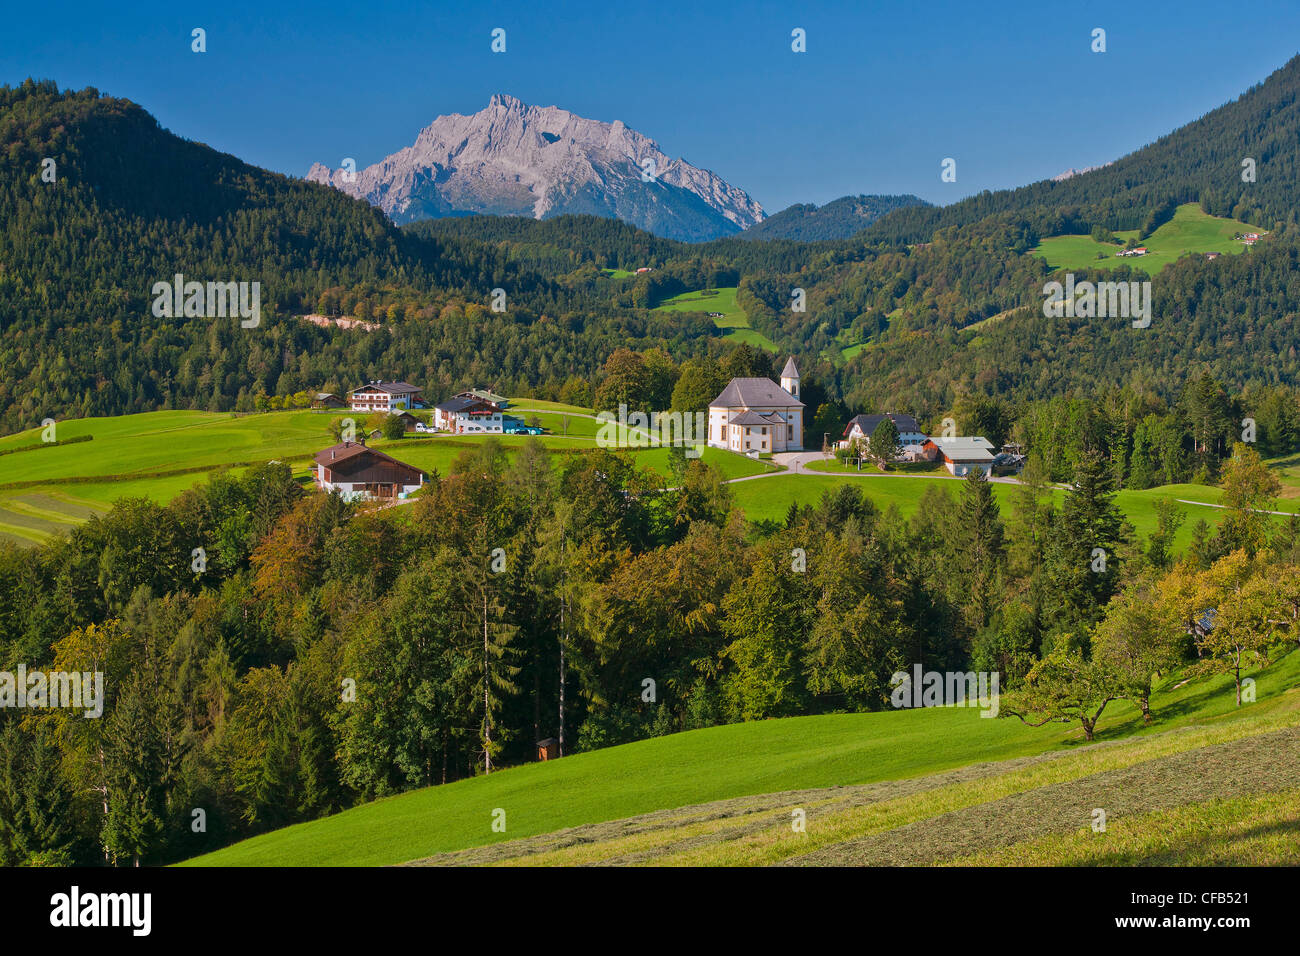 Europe, Germany, Bavaria, Upper Bavaria, Berchtesgaden, Marktschellenberg, Ettenberg, Hochkalter, mountain, mountains, Alps, rel Stock Photo